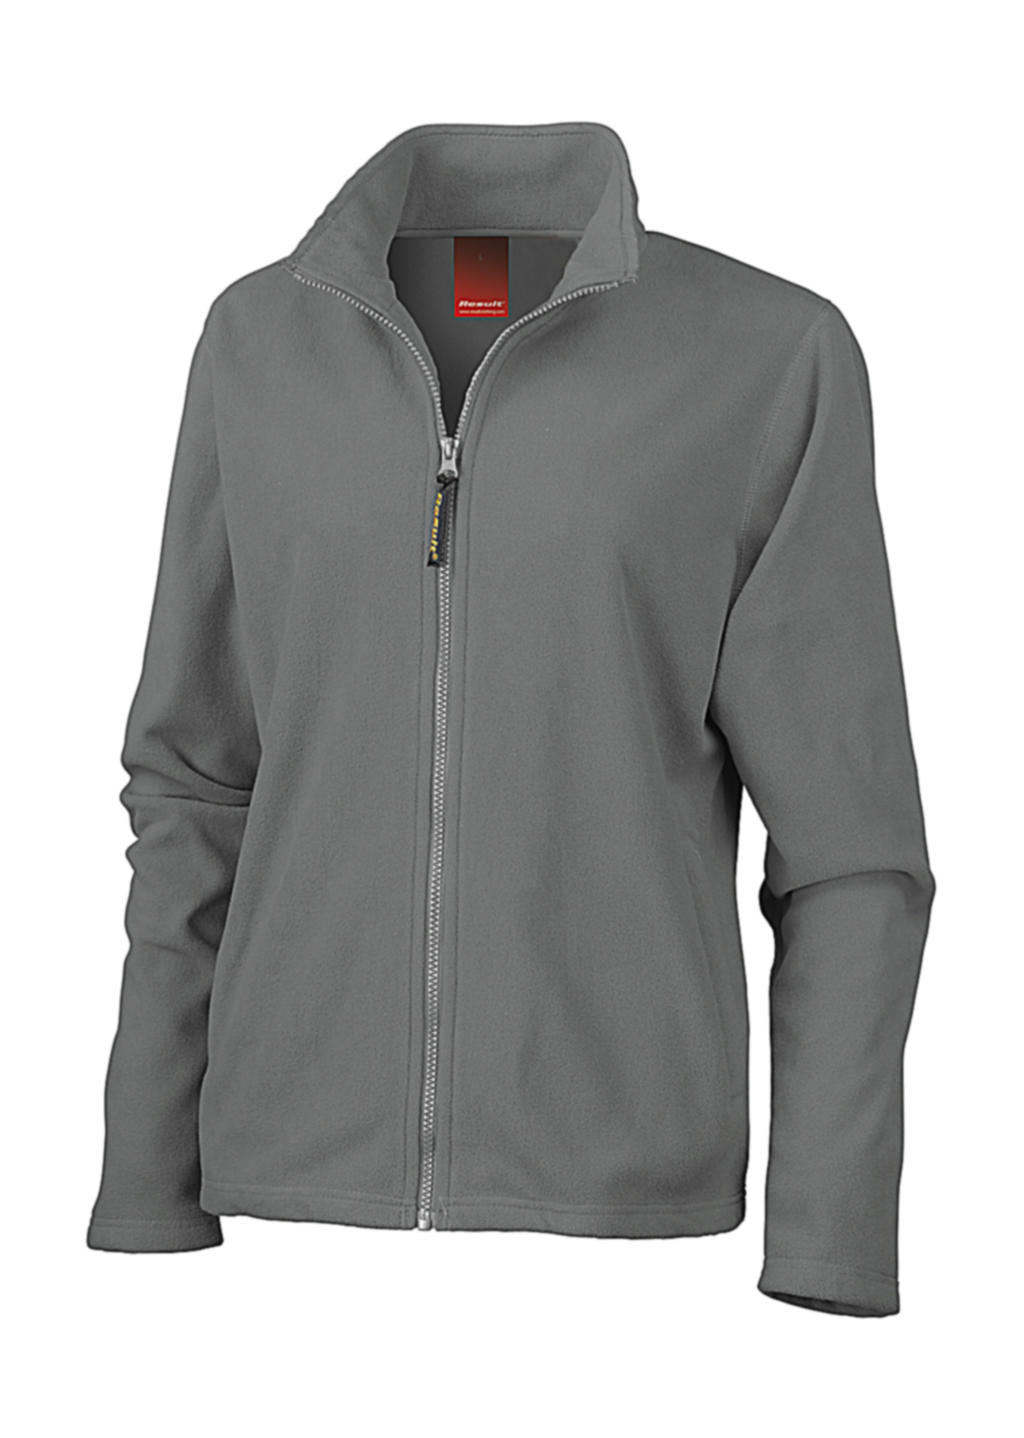  Ladies Horizon High Grade Microfleece Jacket in Farbe Dove Grey